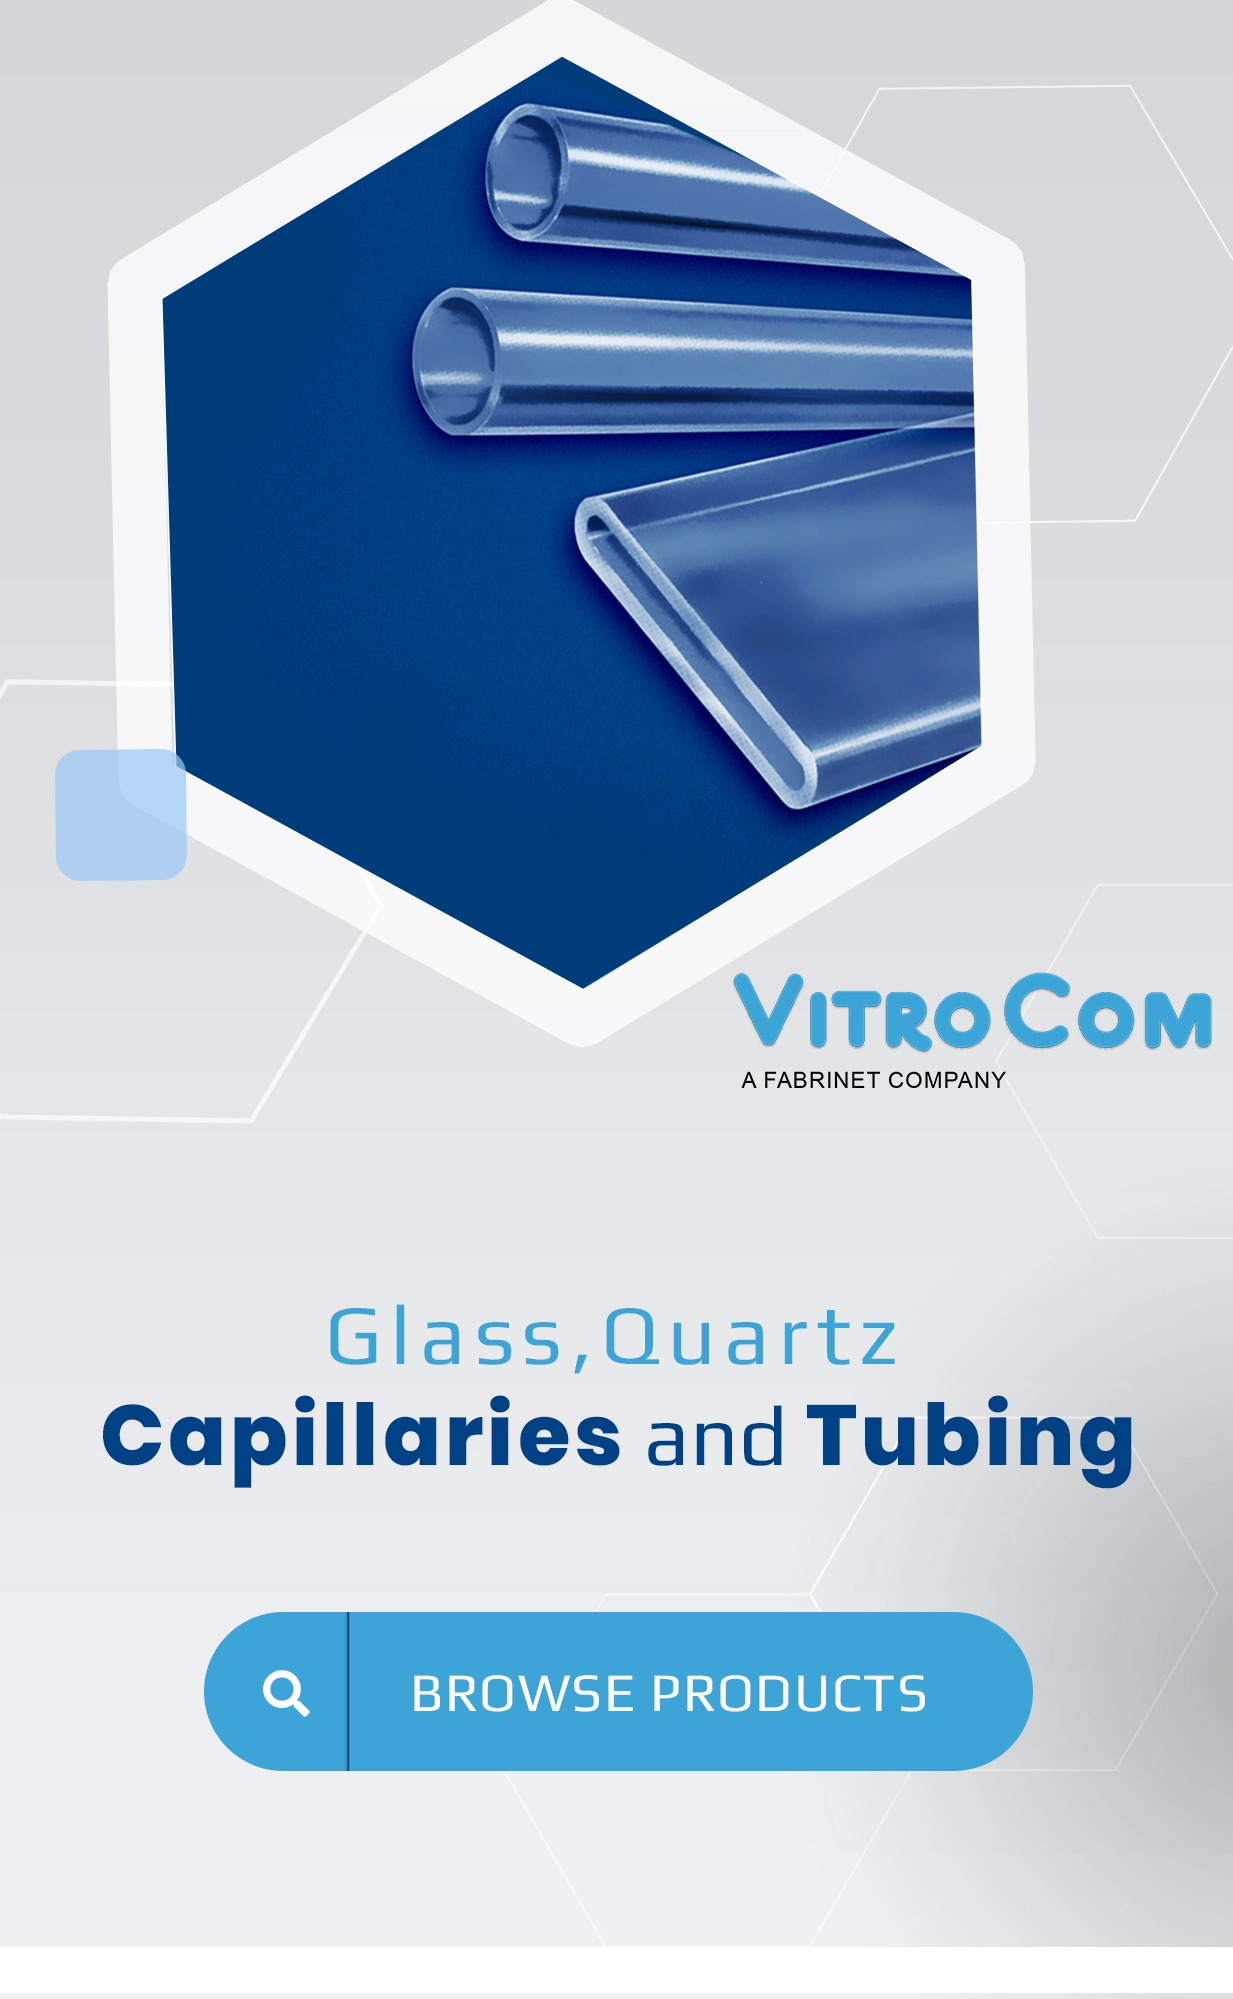 Vitrocom Products